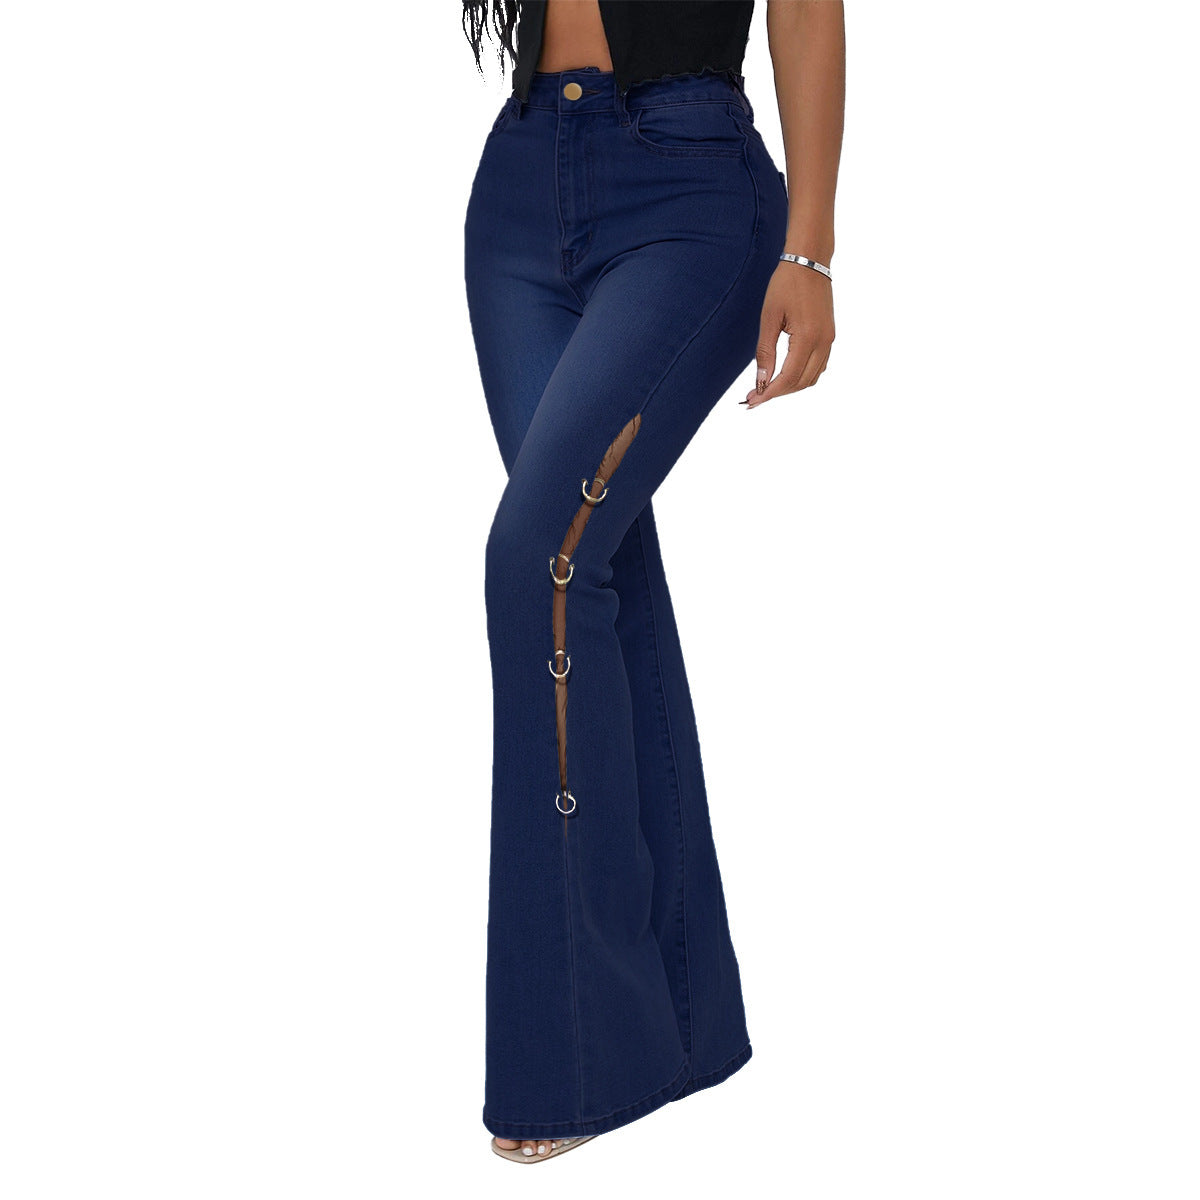 Fashion Metal Denim Women Trumpet Jeans-Pants-Dark Blue-S-Free Shipping Leatheretro